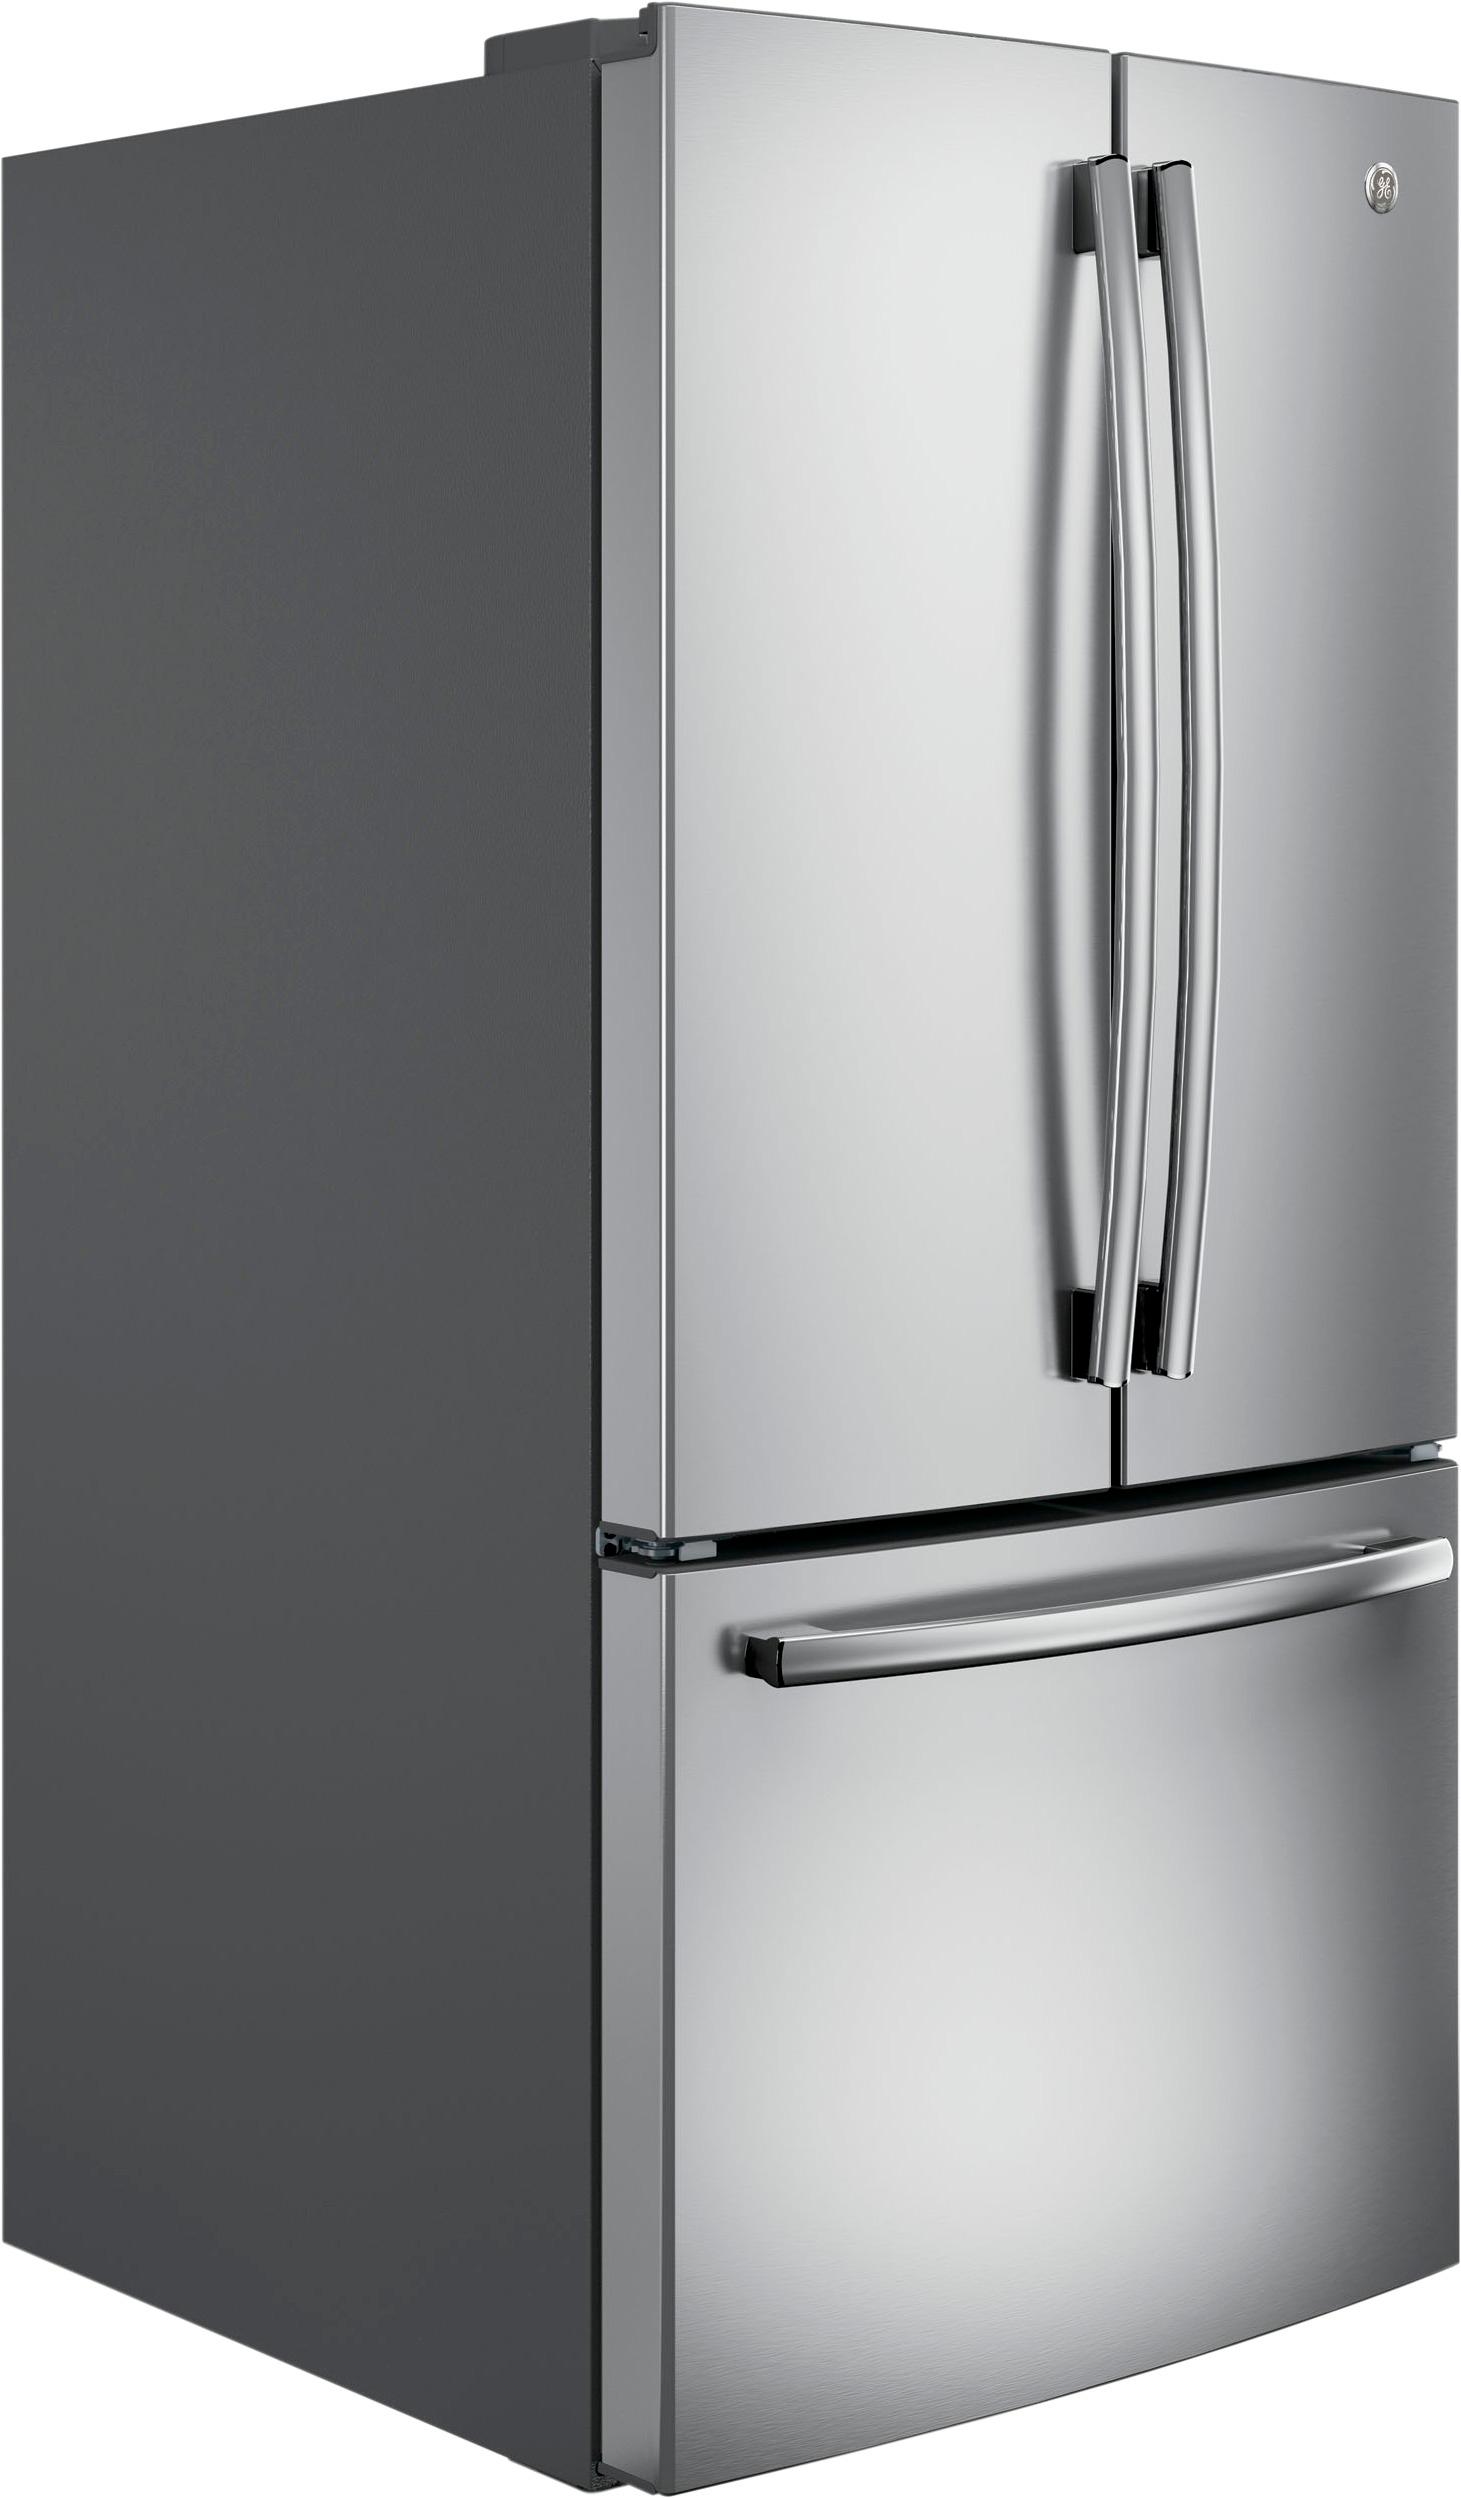 30+ Ge french door refrigerator temperature problems ideas